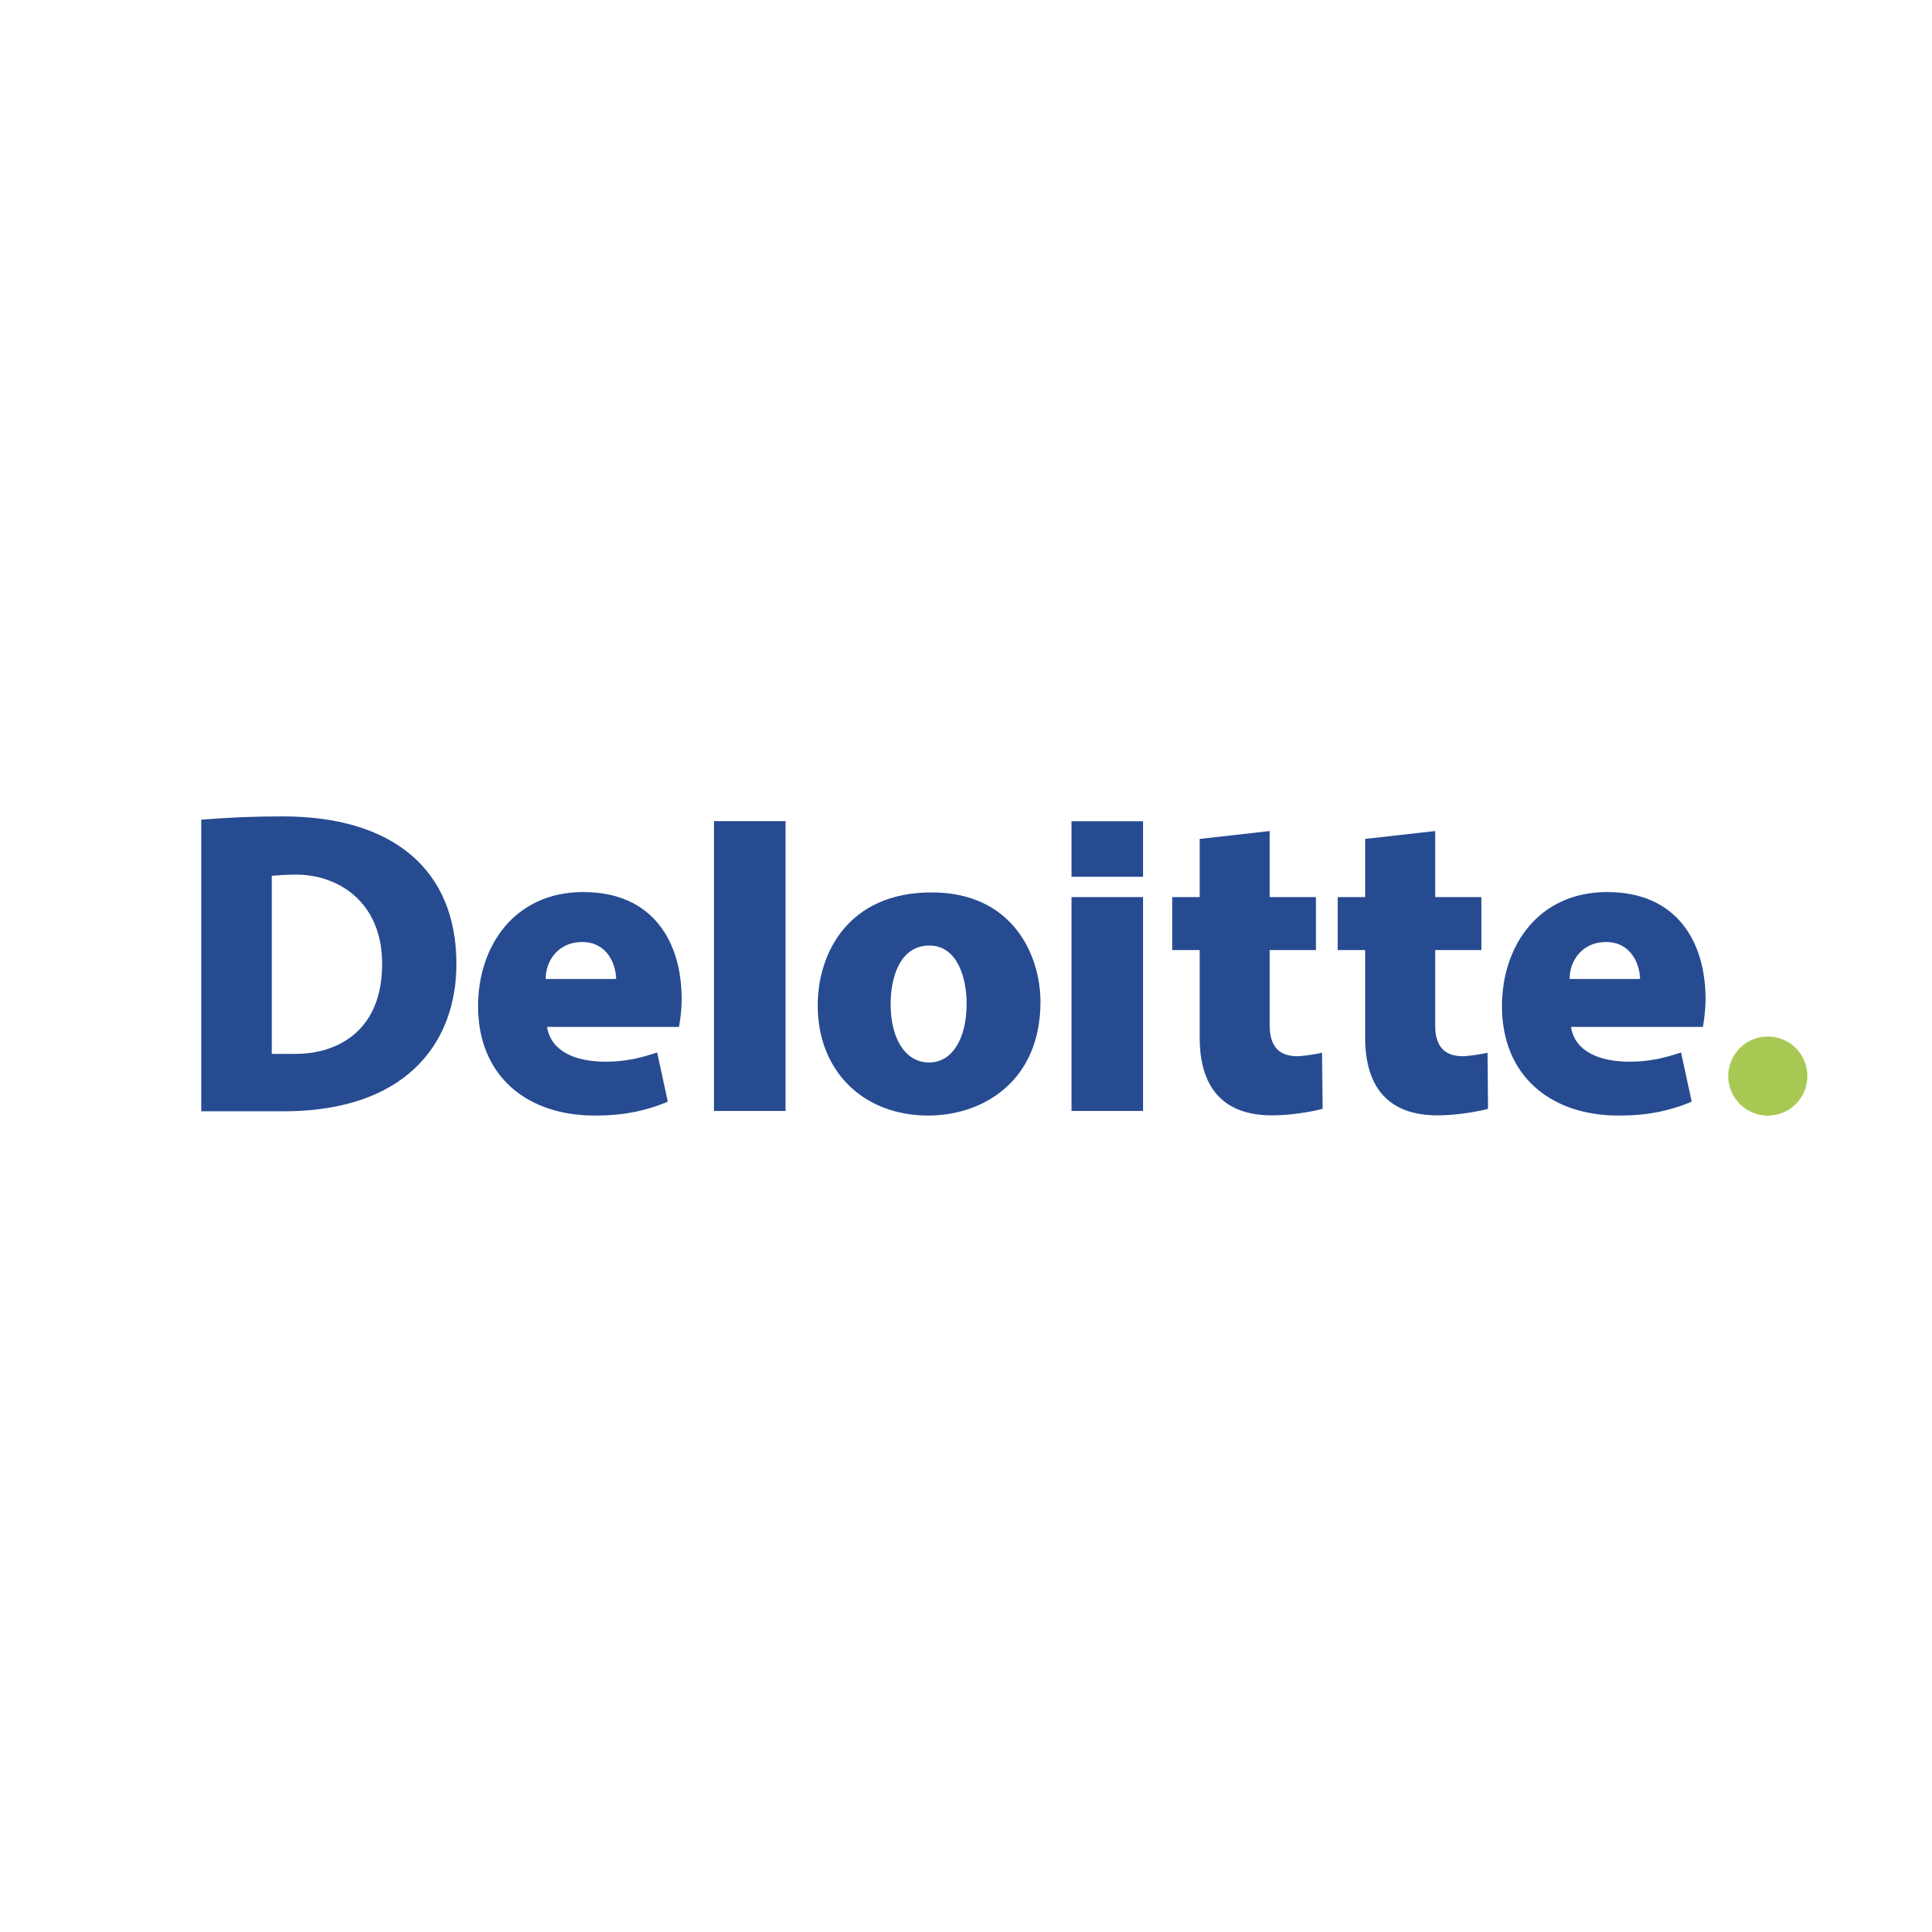 deloitte-logo-png-transparent.png